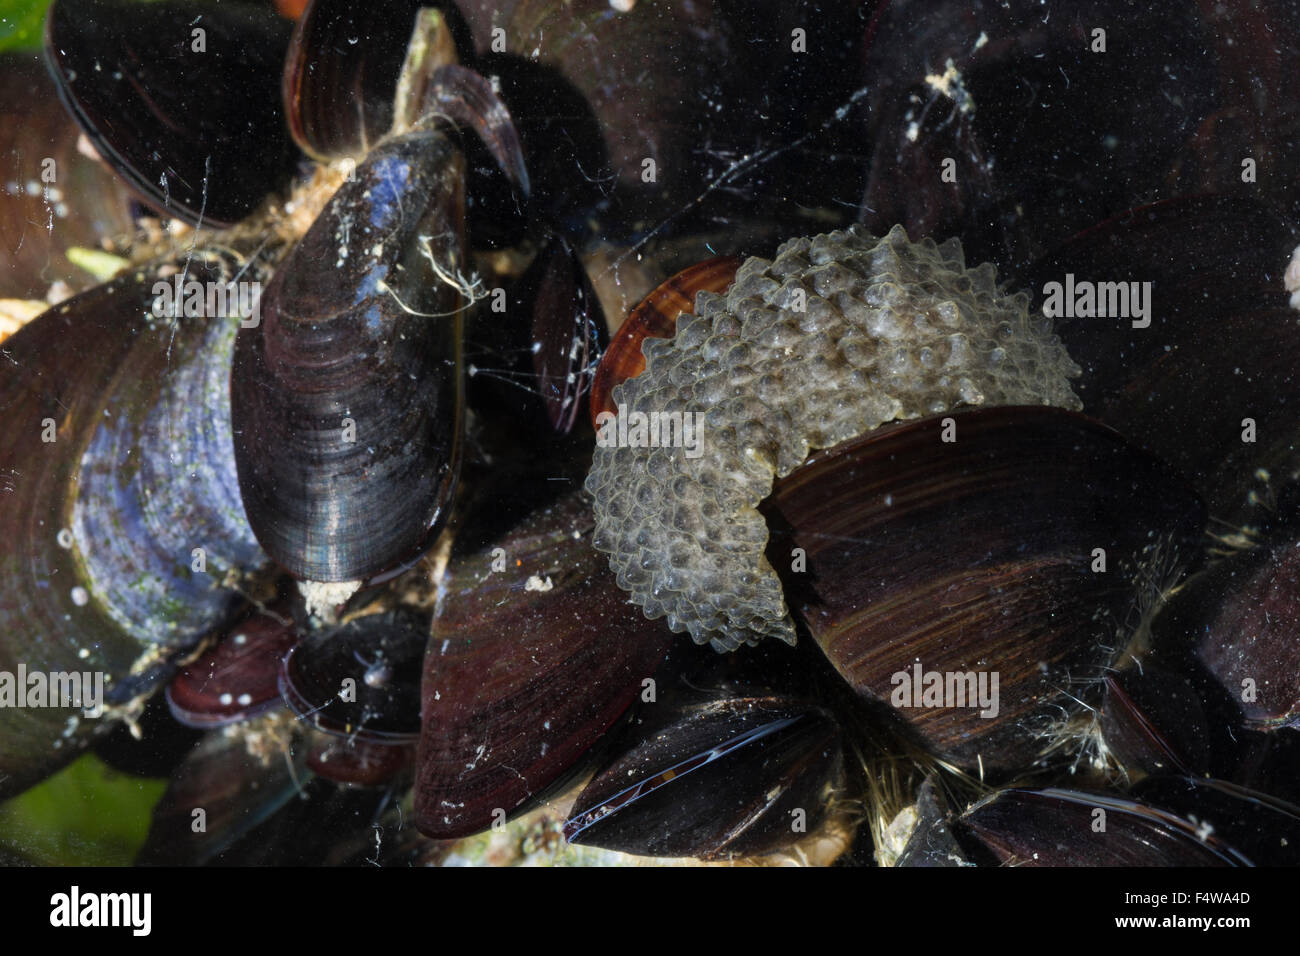 Mar Céltico slug, mar Céltico-slug, Celta, Nacktschnecke Seaslug, Onchidella celtica, Onchidiella celtica, Onchidium celticum Foto de stock